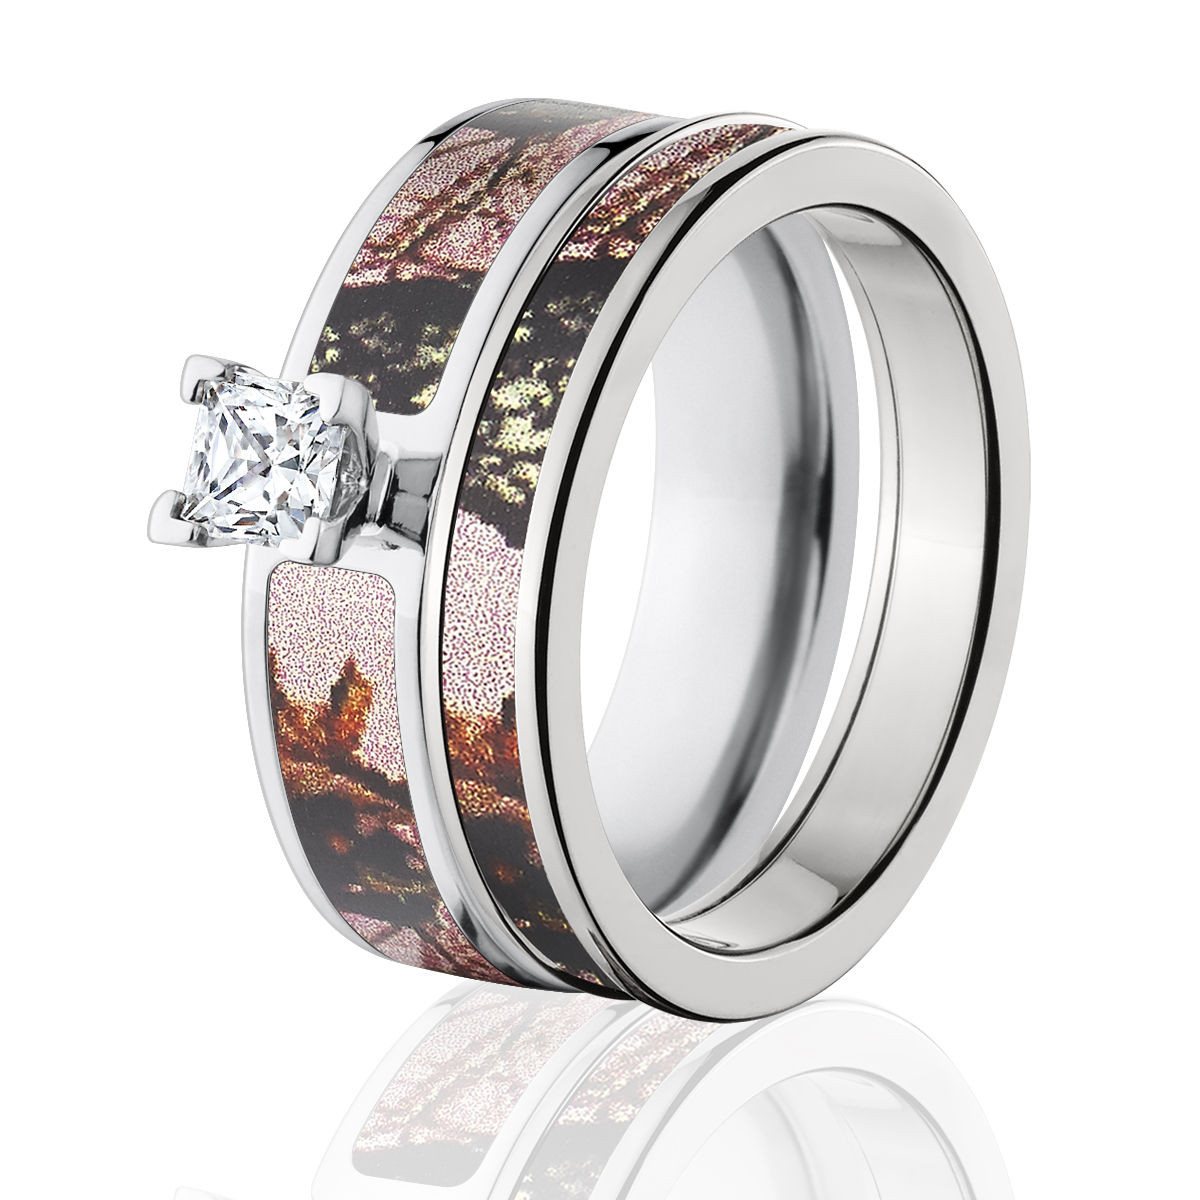 Camouflage Wedding Ring Sets
 Mossy Oak Pink Break Up Camo Bridal Set Pink Camo Ring Sets